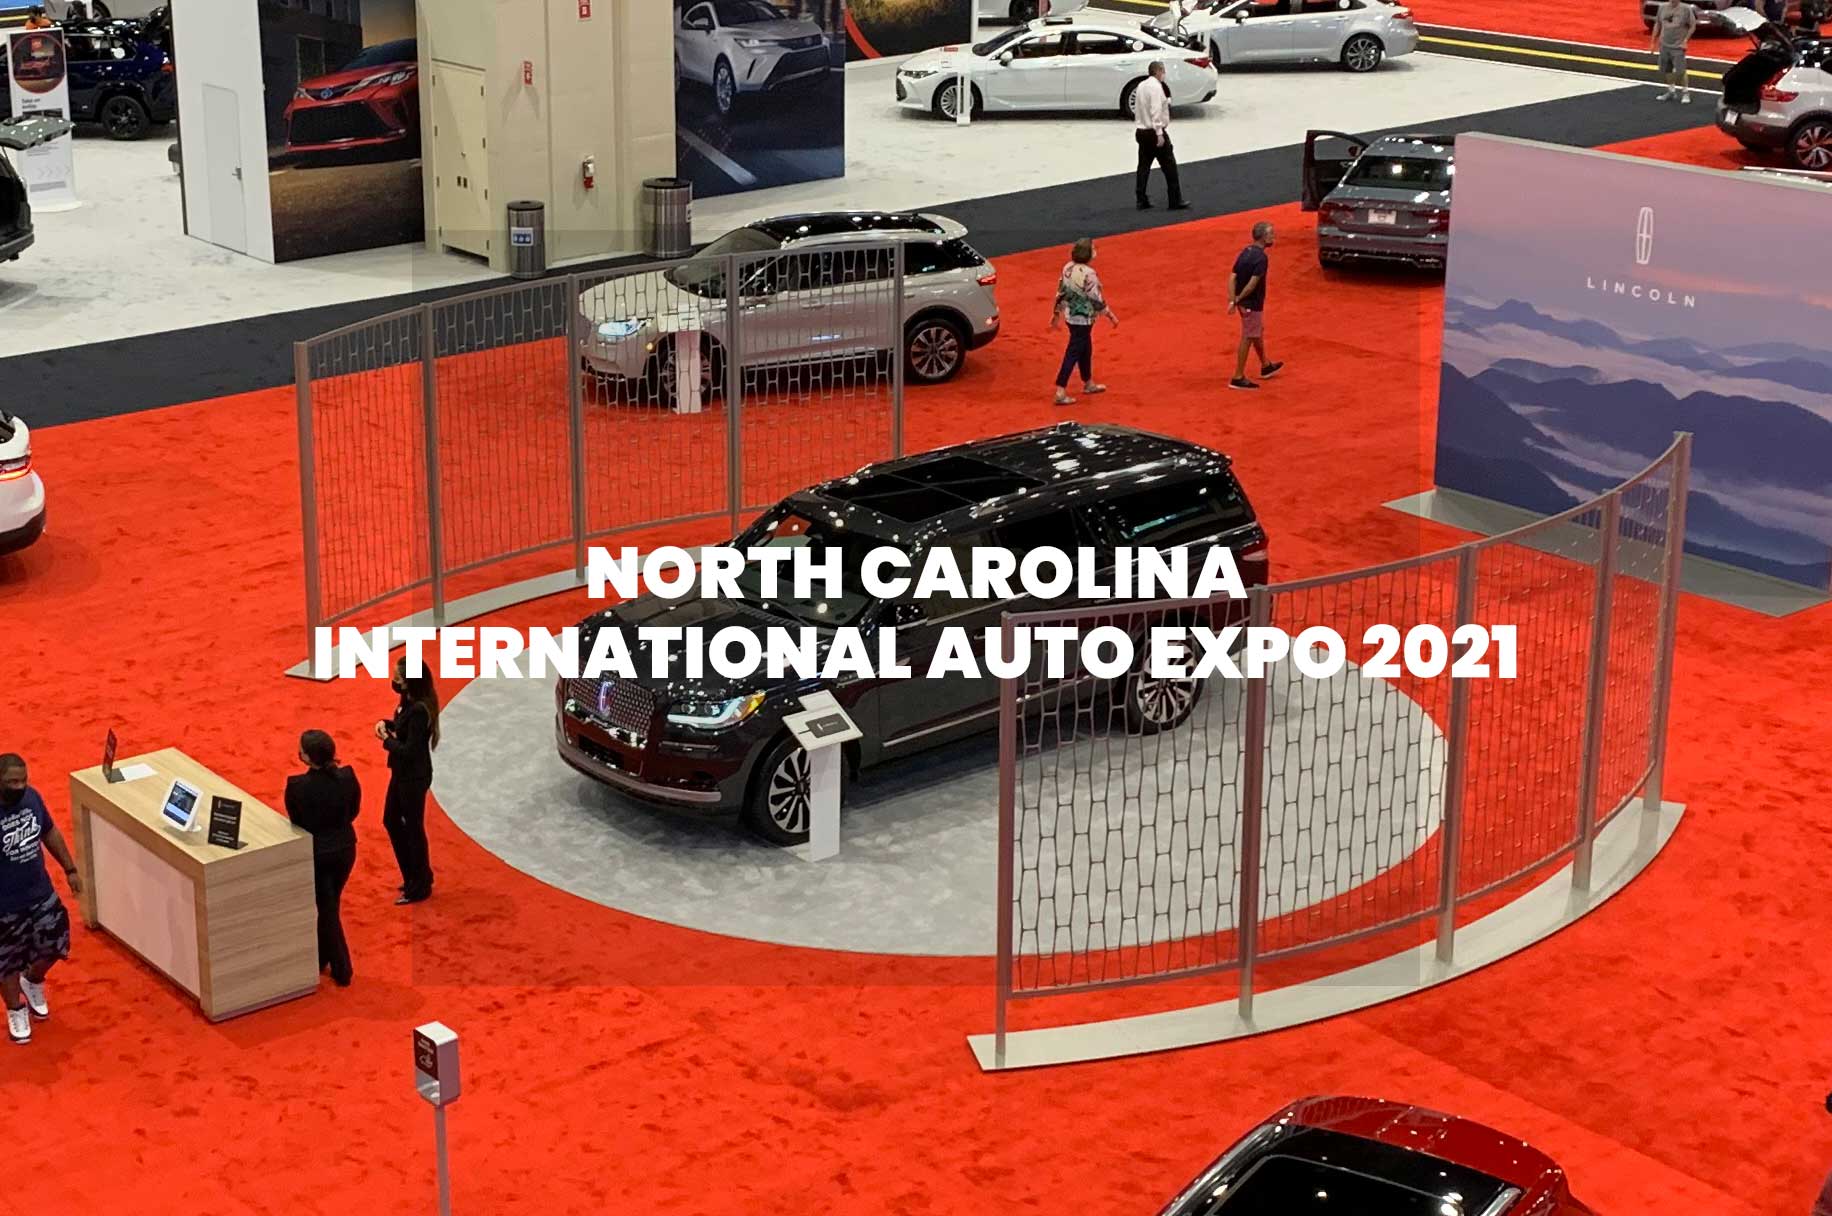 NC International Auto Expo 2021